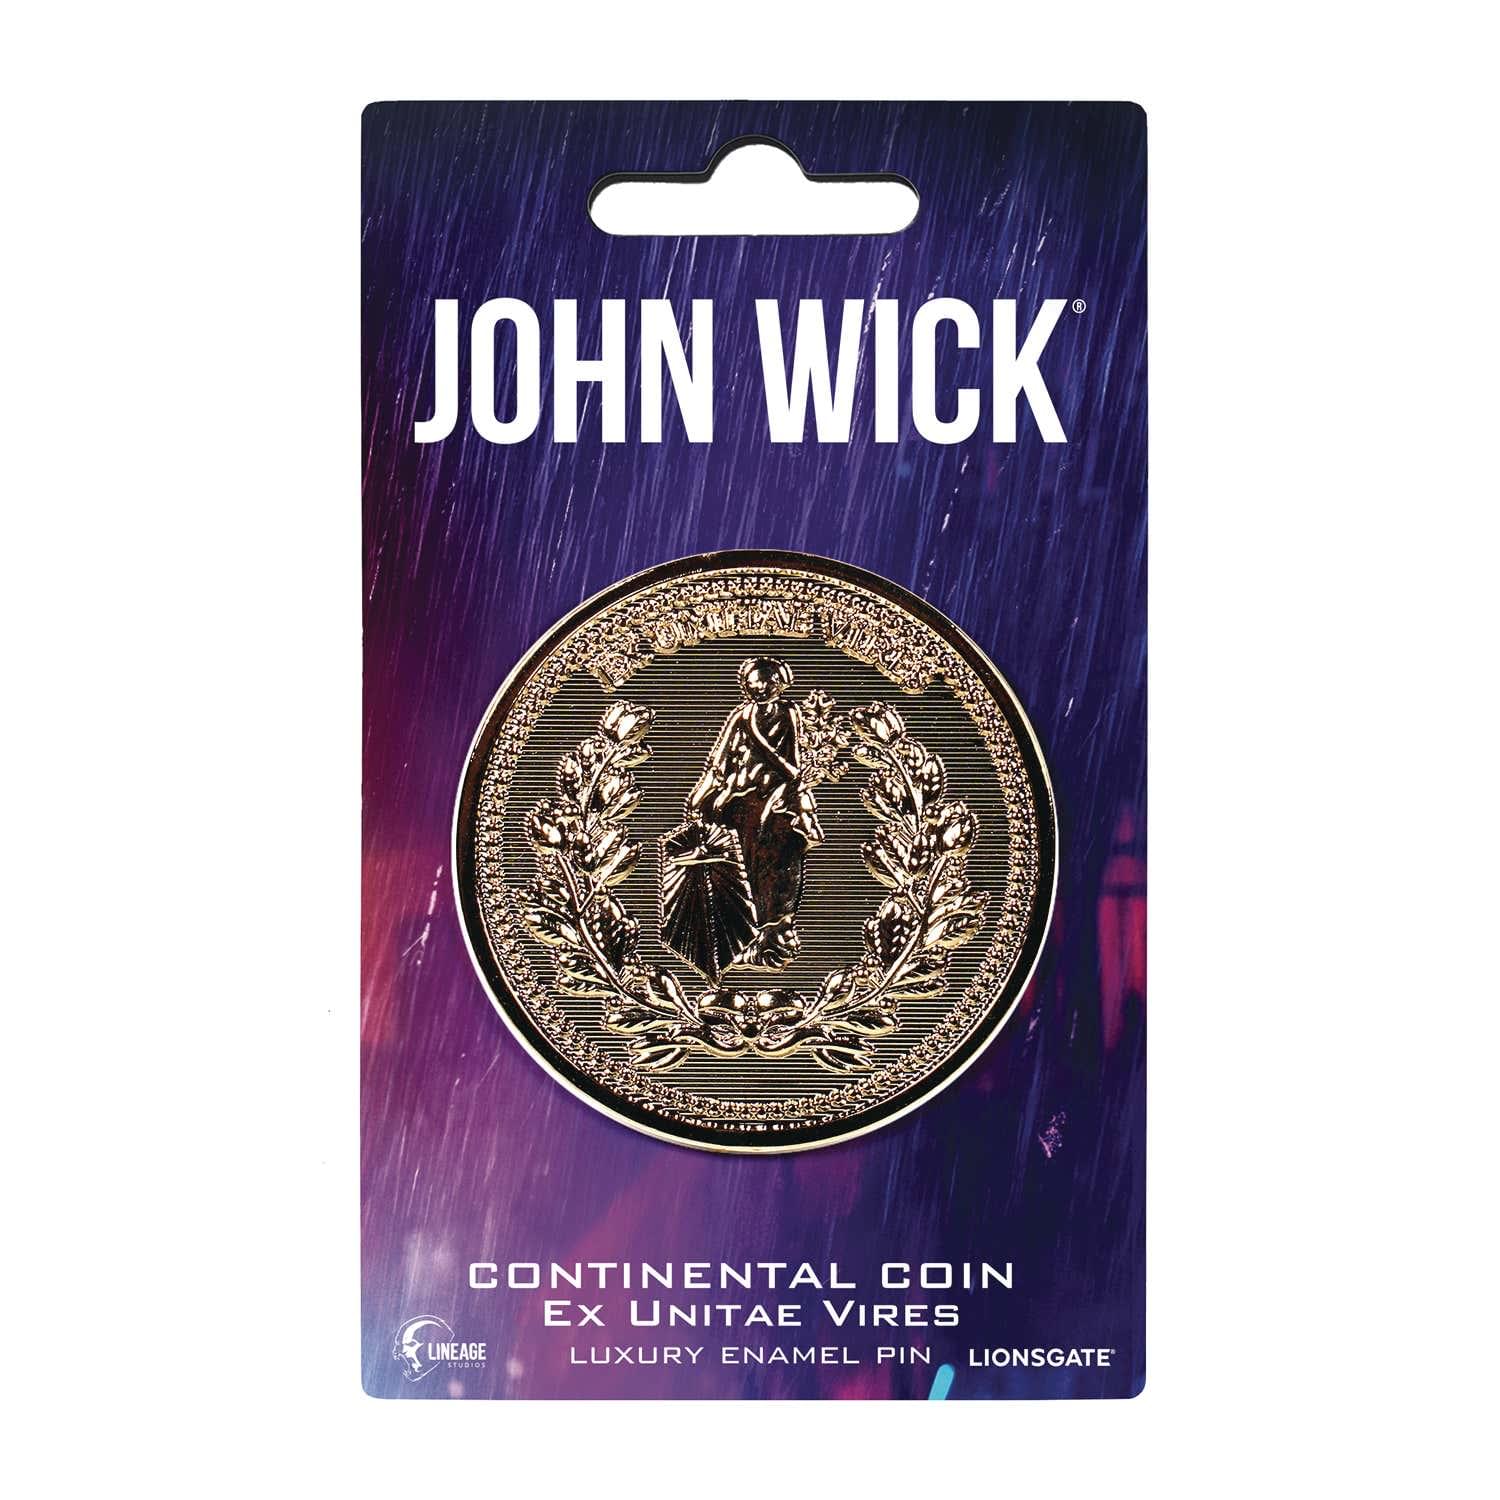 John Wick - Continental Coin (Ex Unitae Vires)